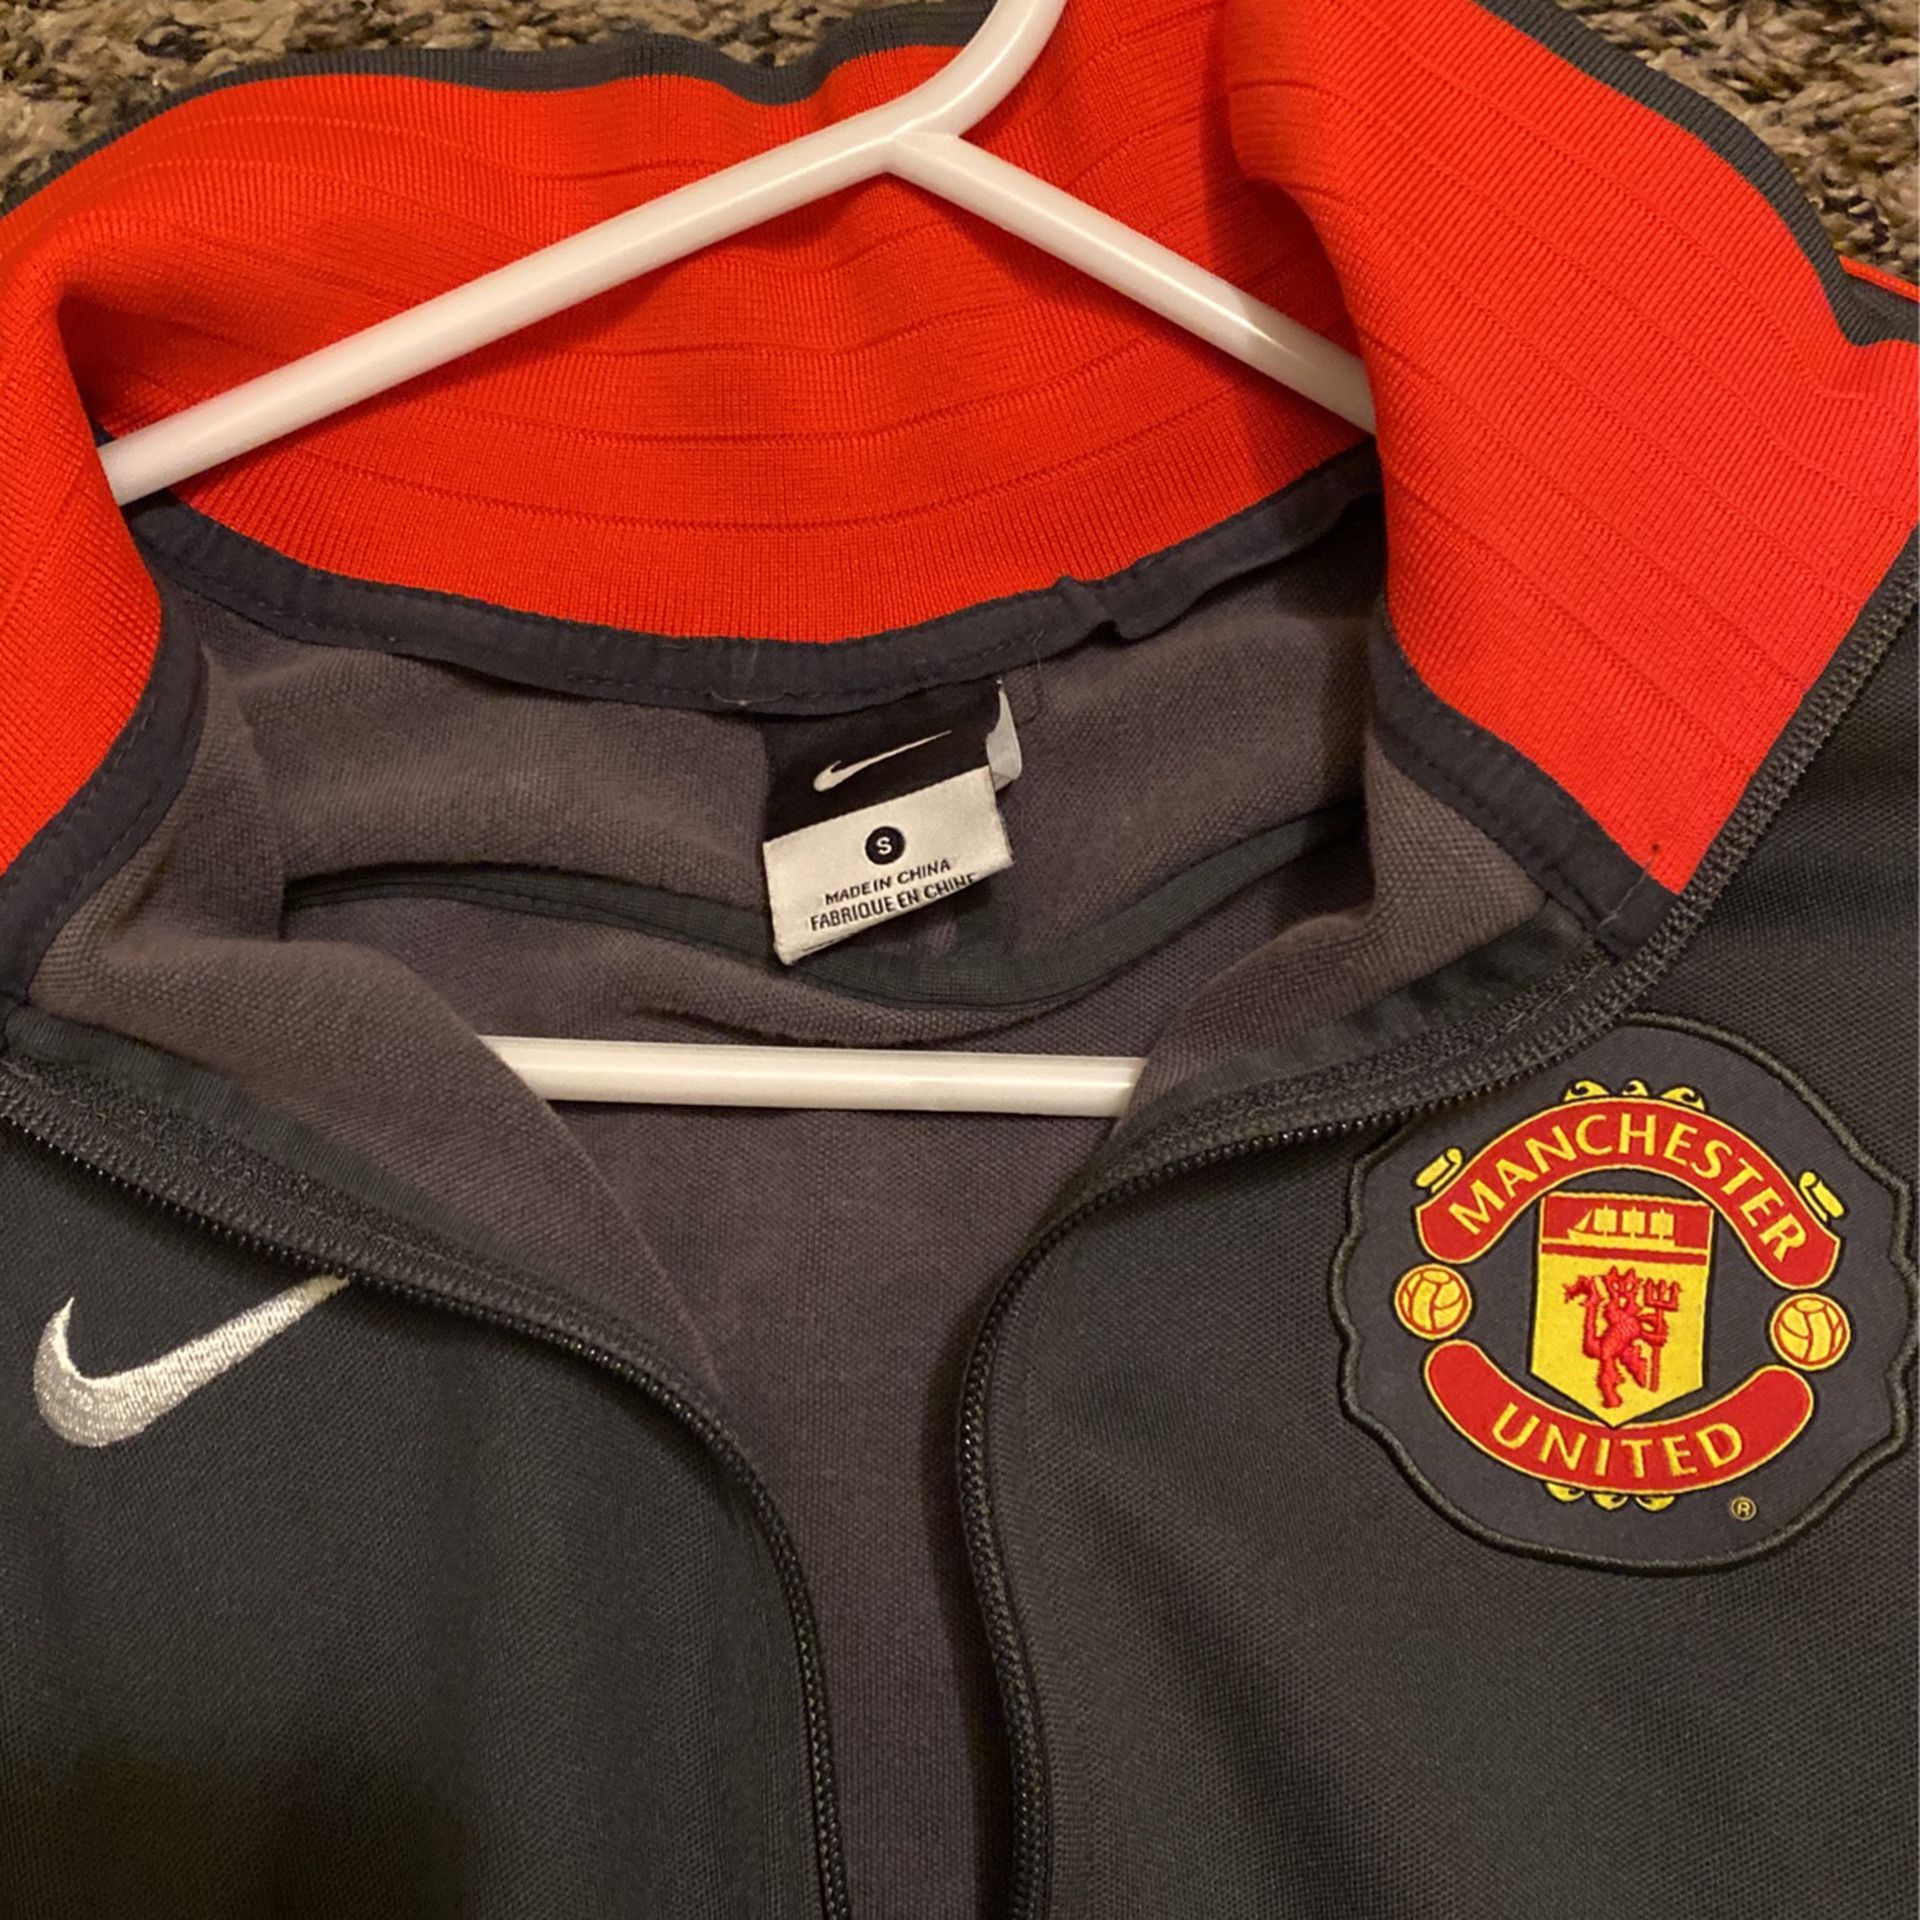 krekel Opera Shinkan Nike Manchester United Jacket Size Small for Sale in Dinuba, CA - OfferUp